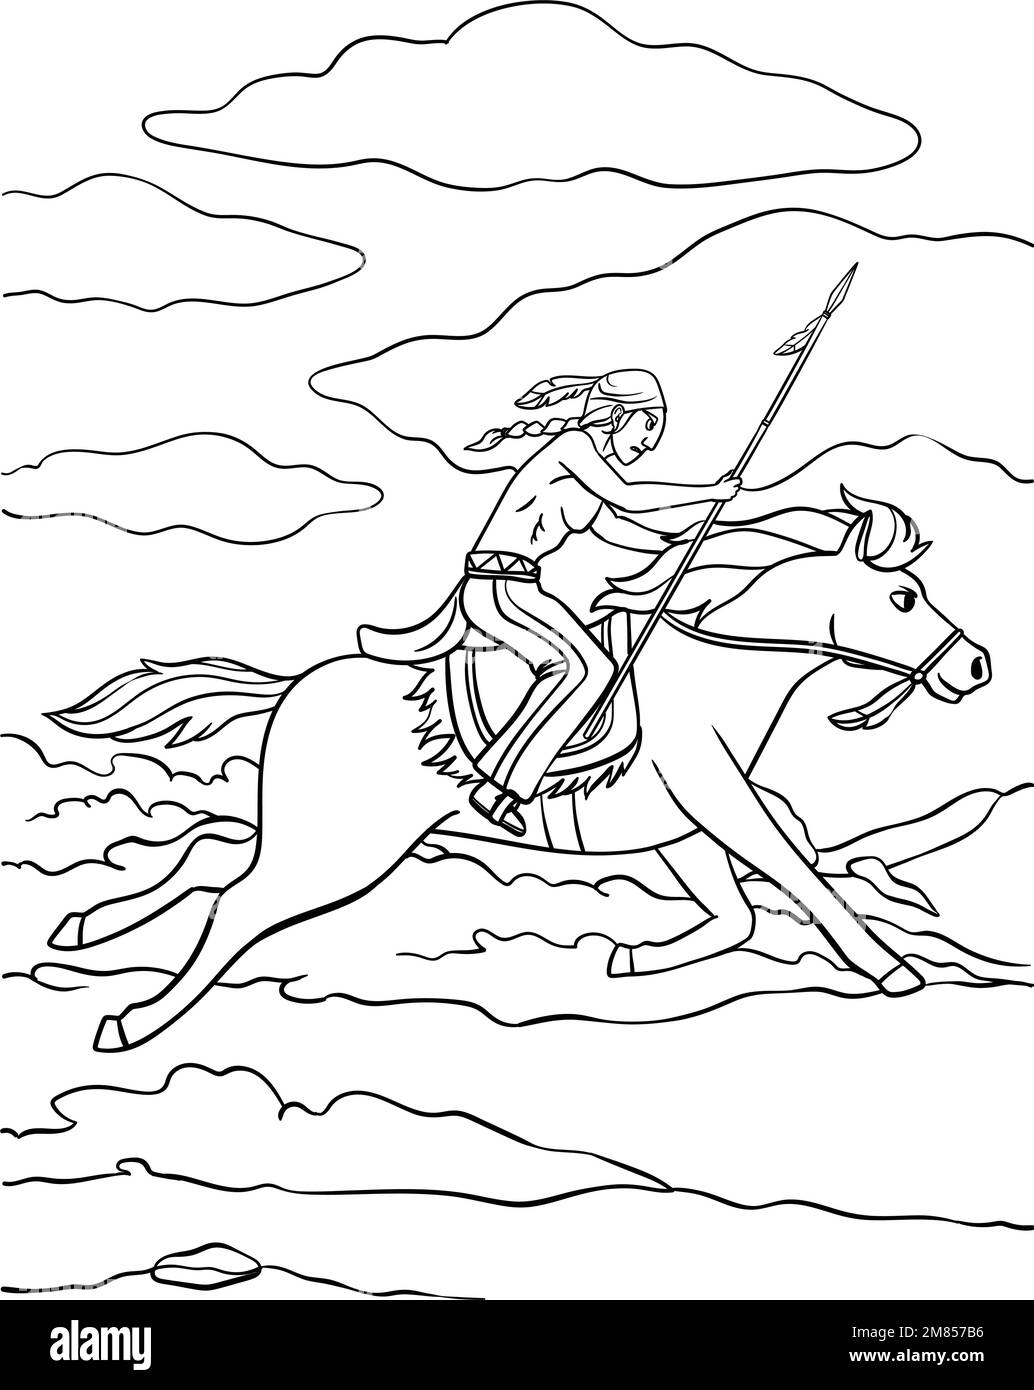 Native American Indian Riding a Horse Coloring  Stock Vector